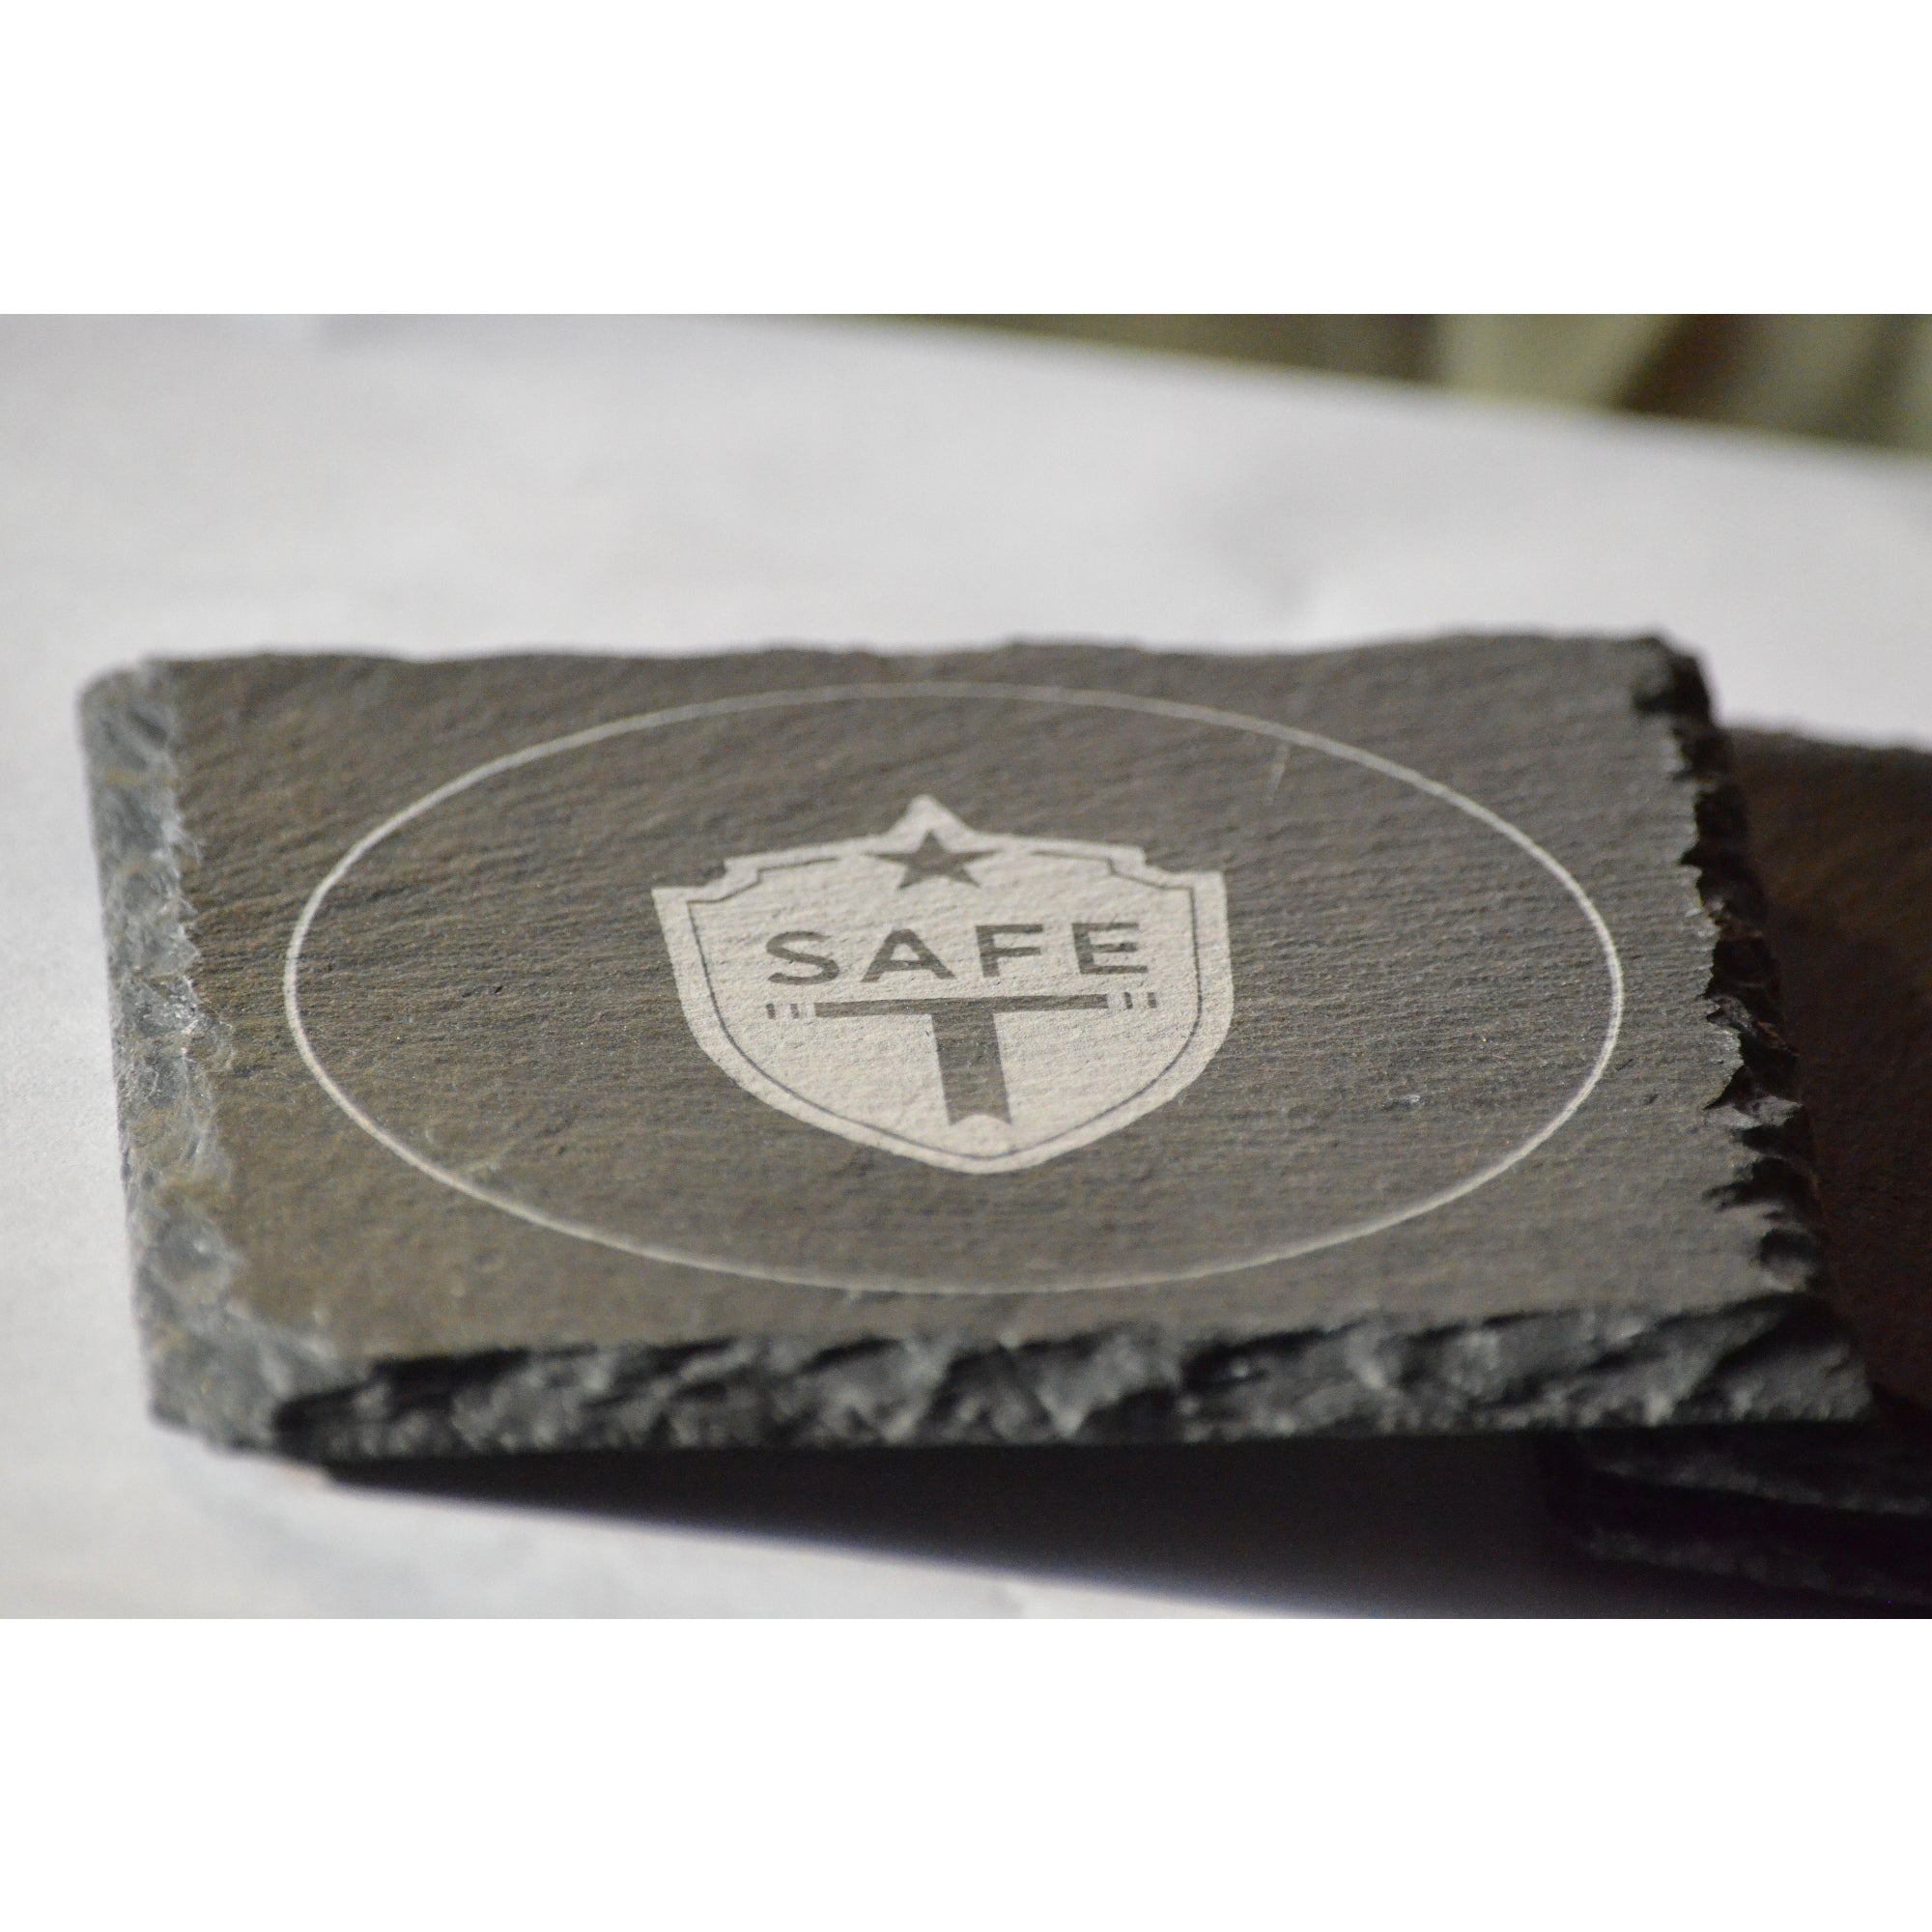 Stone slate coaster - SAFE-T.US